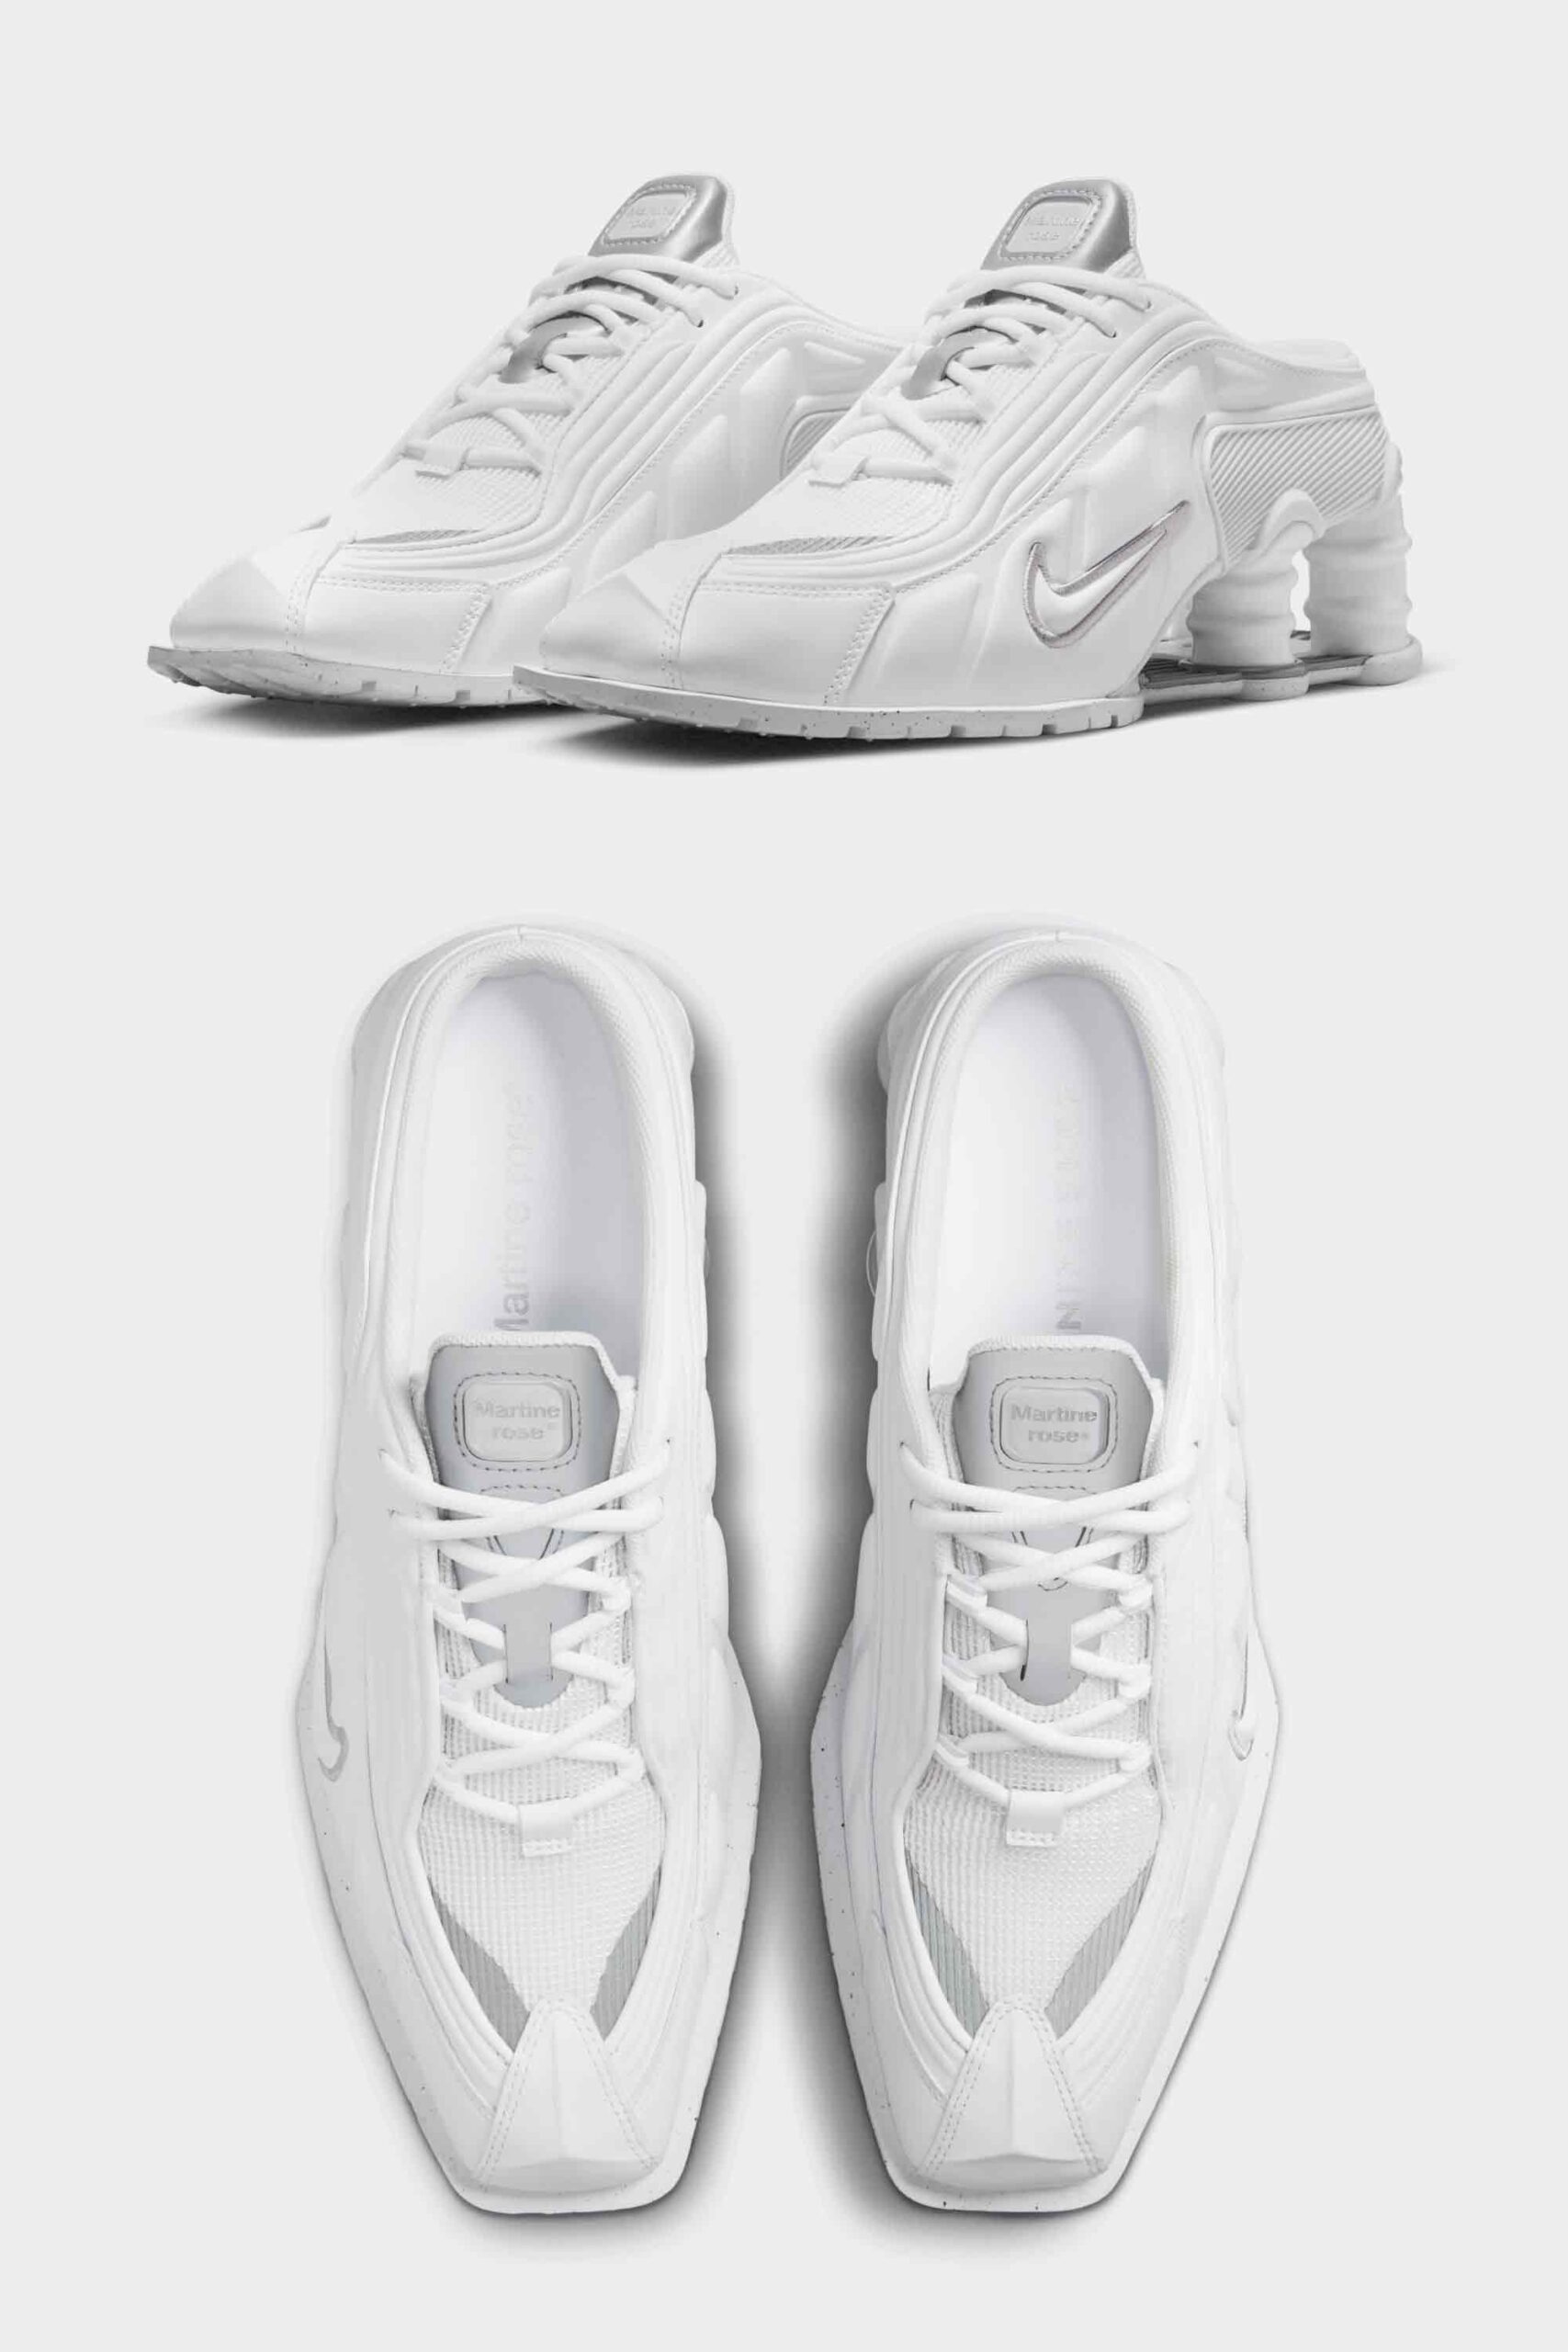 Martine Rose x Nike Shox MR4 – White | sneakerb0b RELEASES